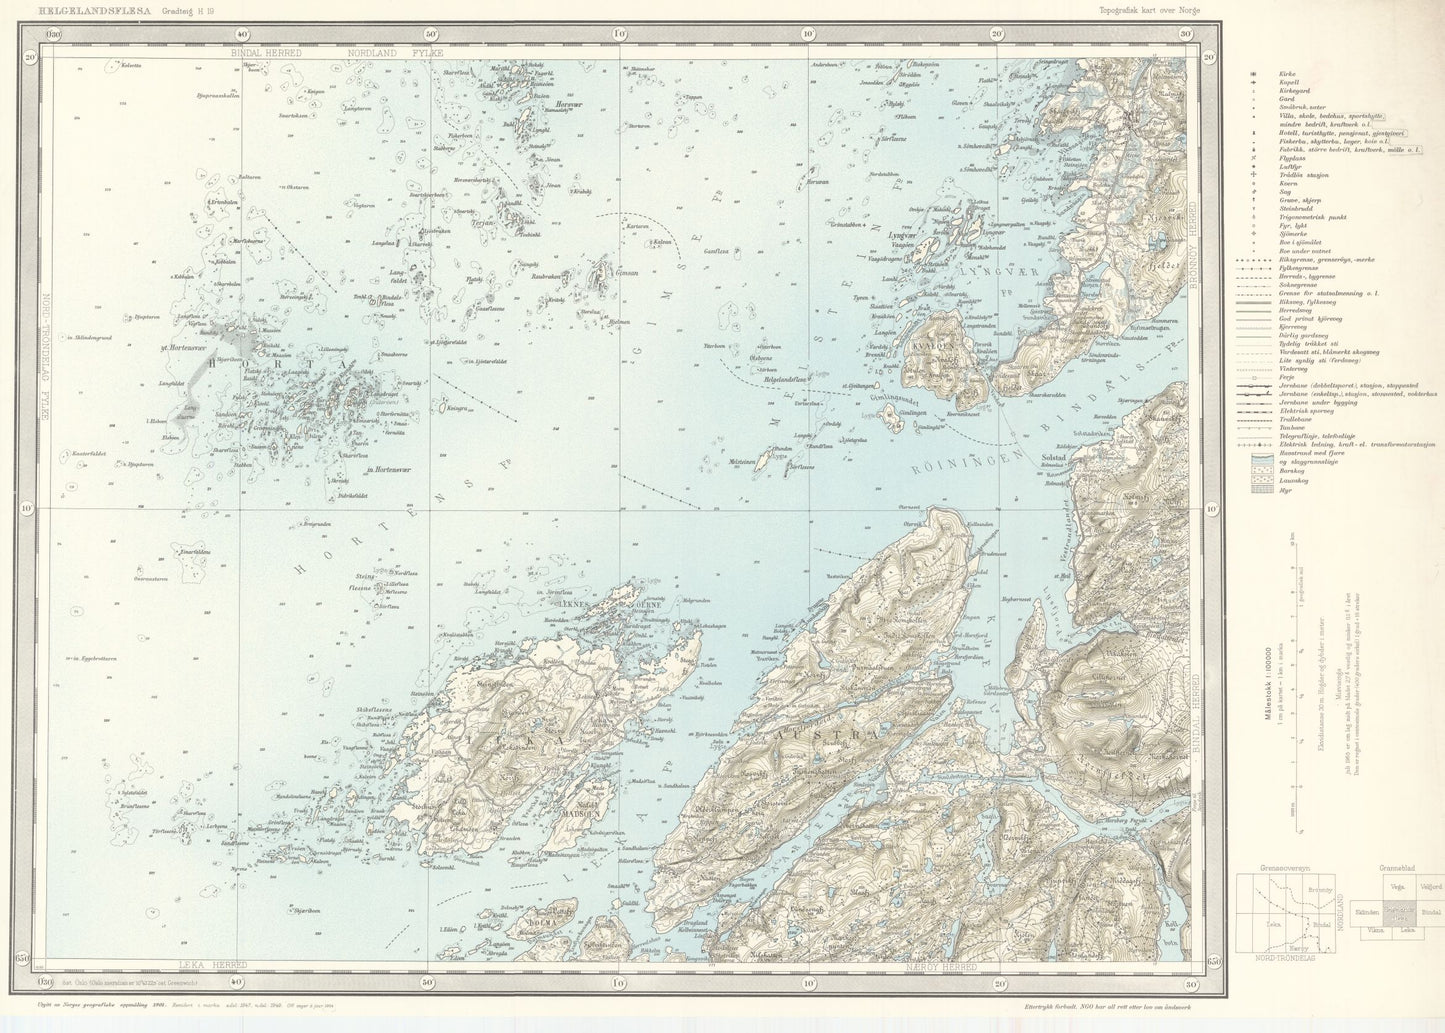 H19 Helgelandsflesa: Nordland